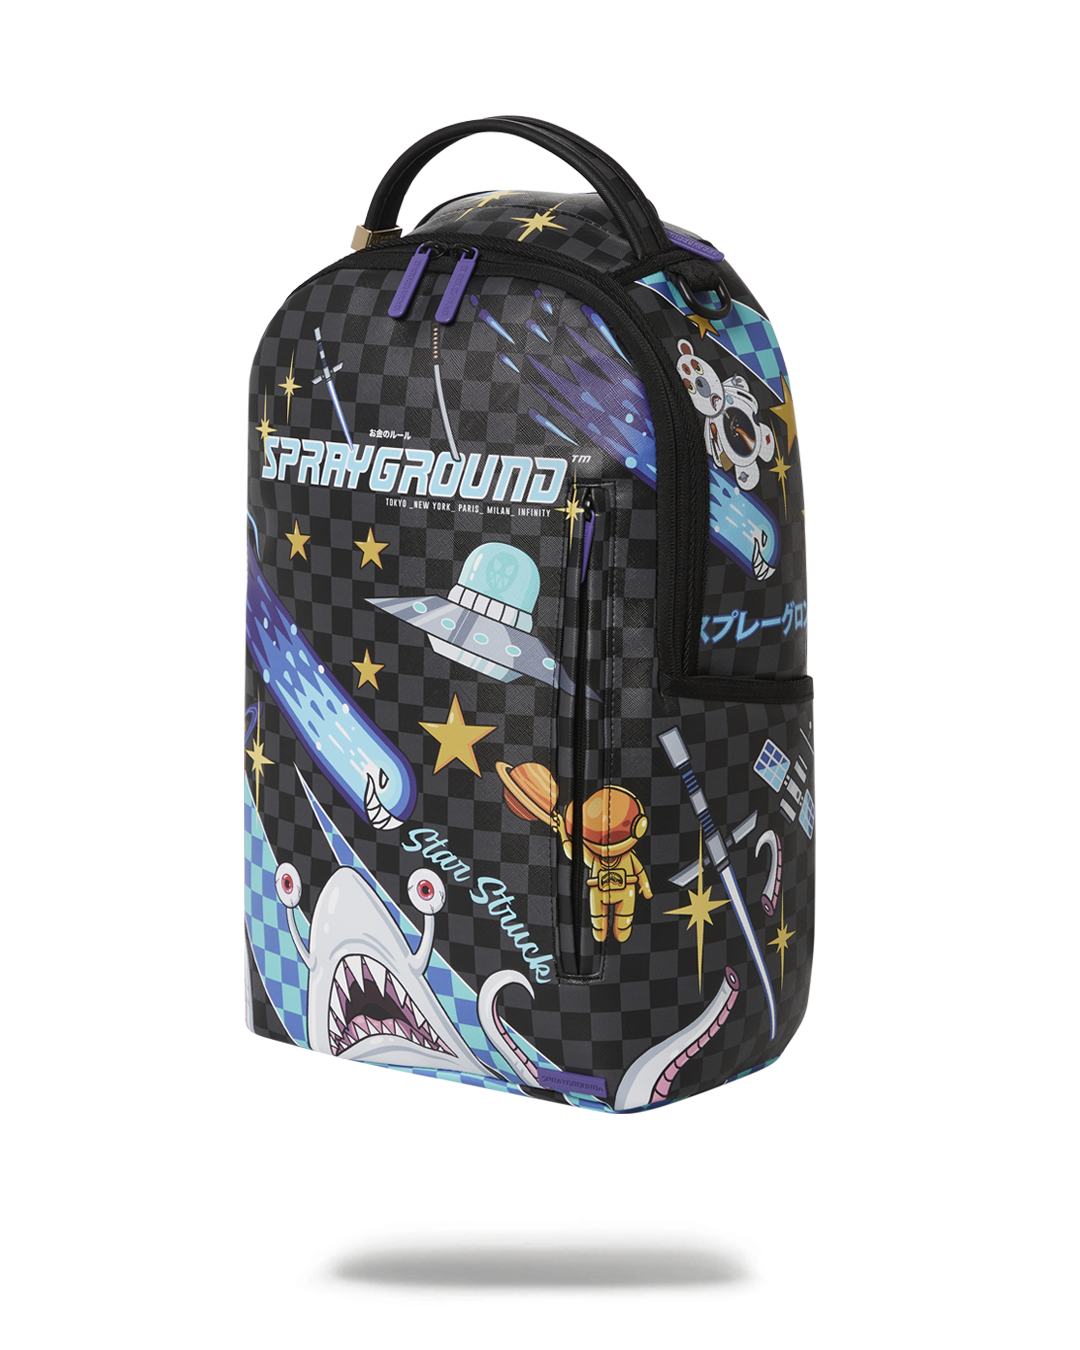 3 Galactic Alien Backpack Clip